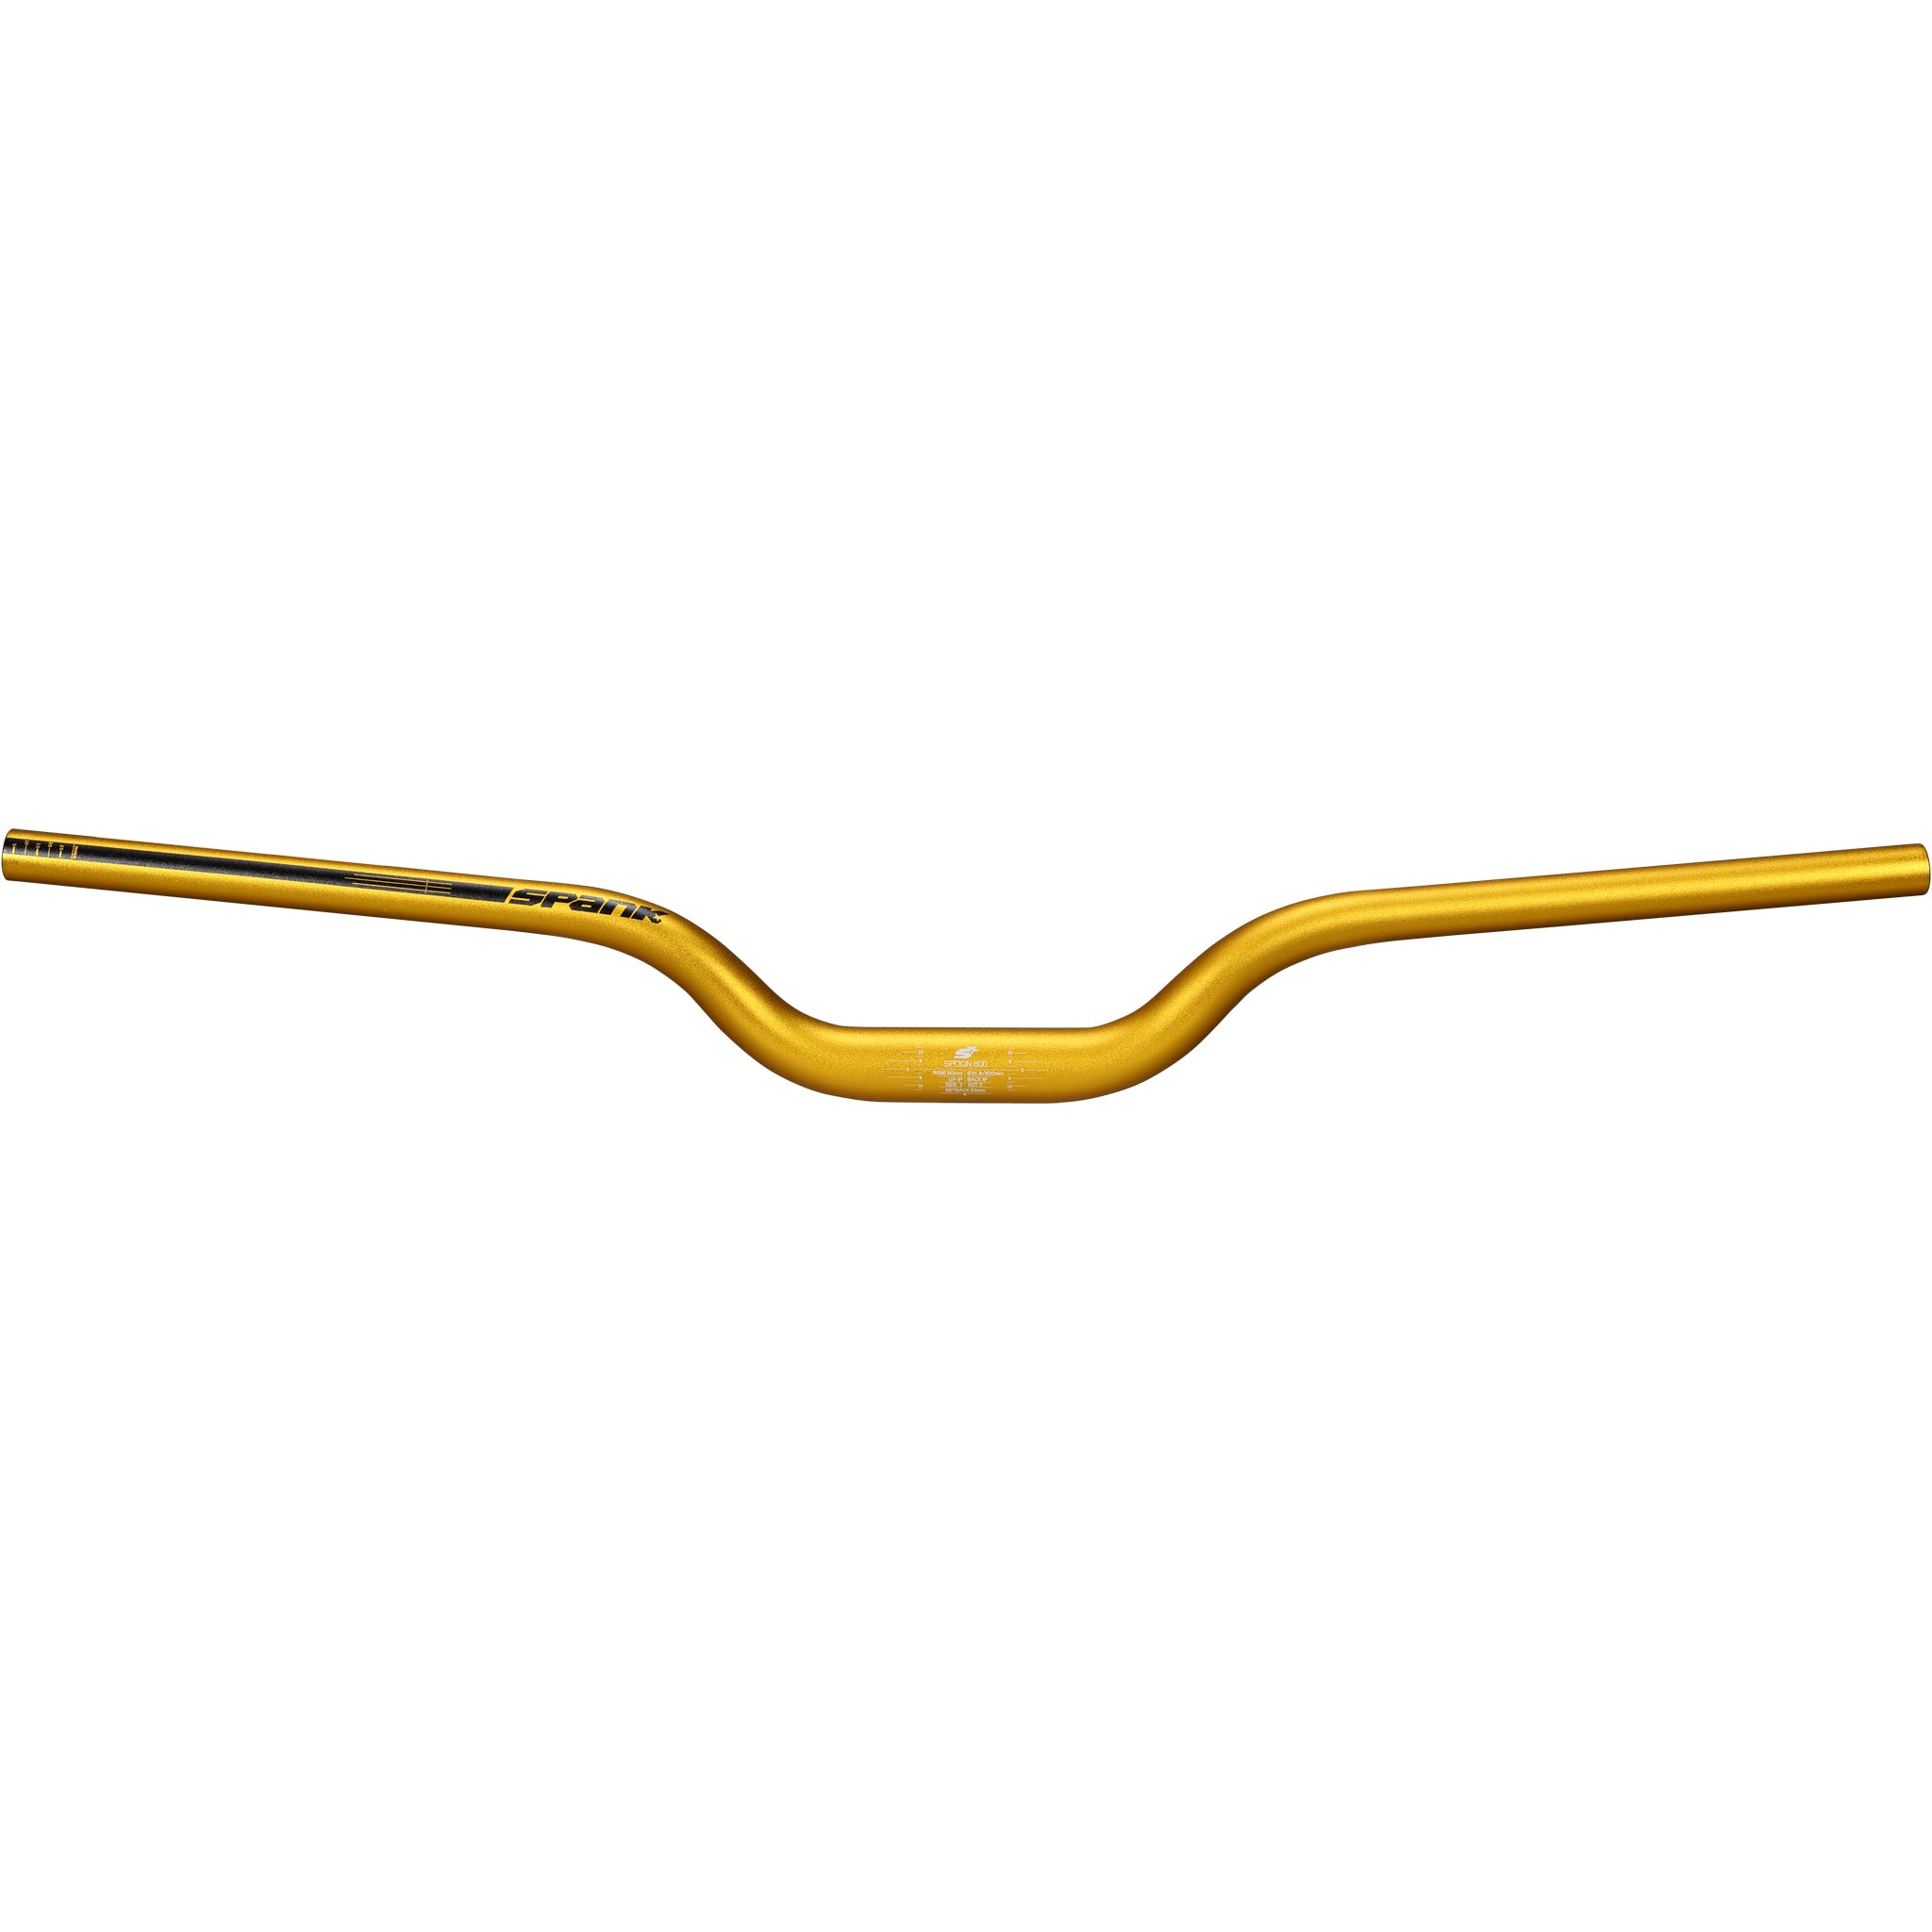 Spank Spoon 800 Riser Bar (31.8) 60mm/800mm Gold